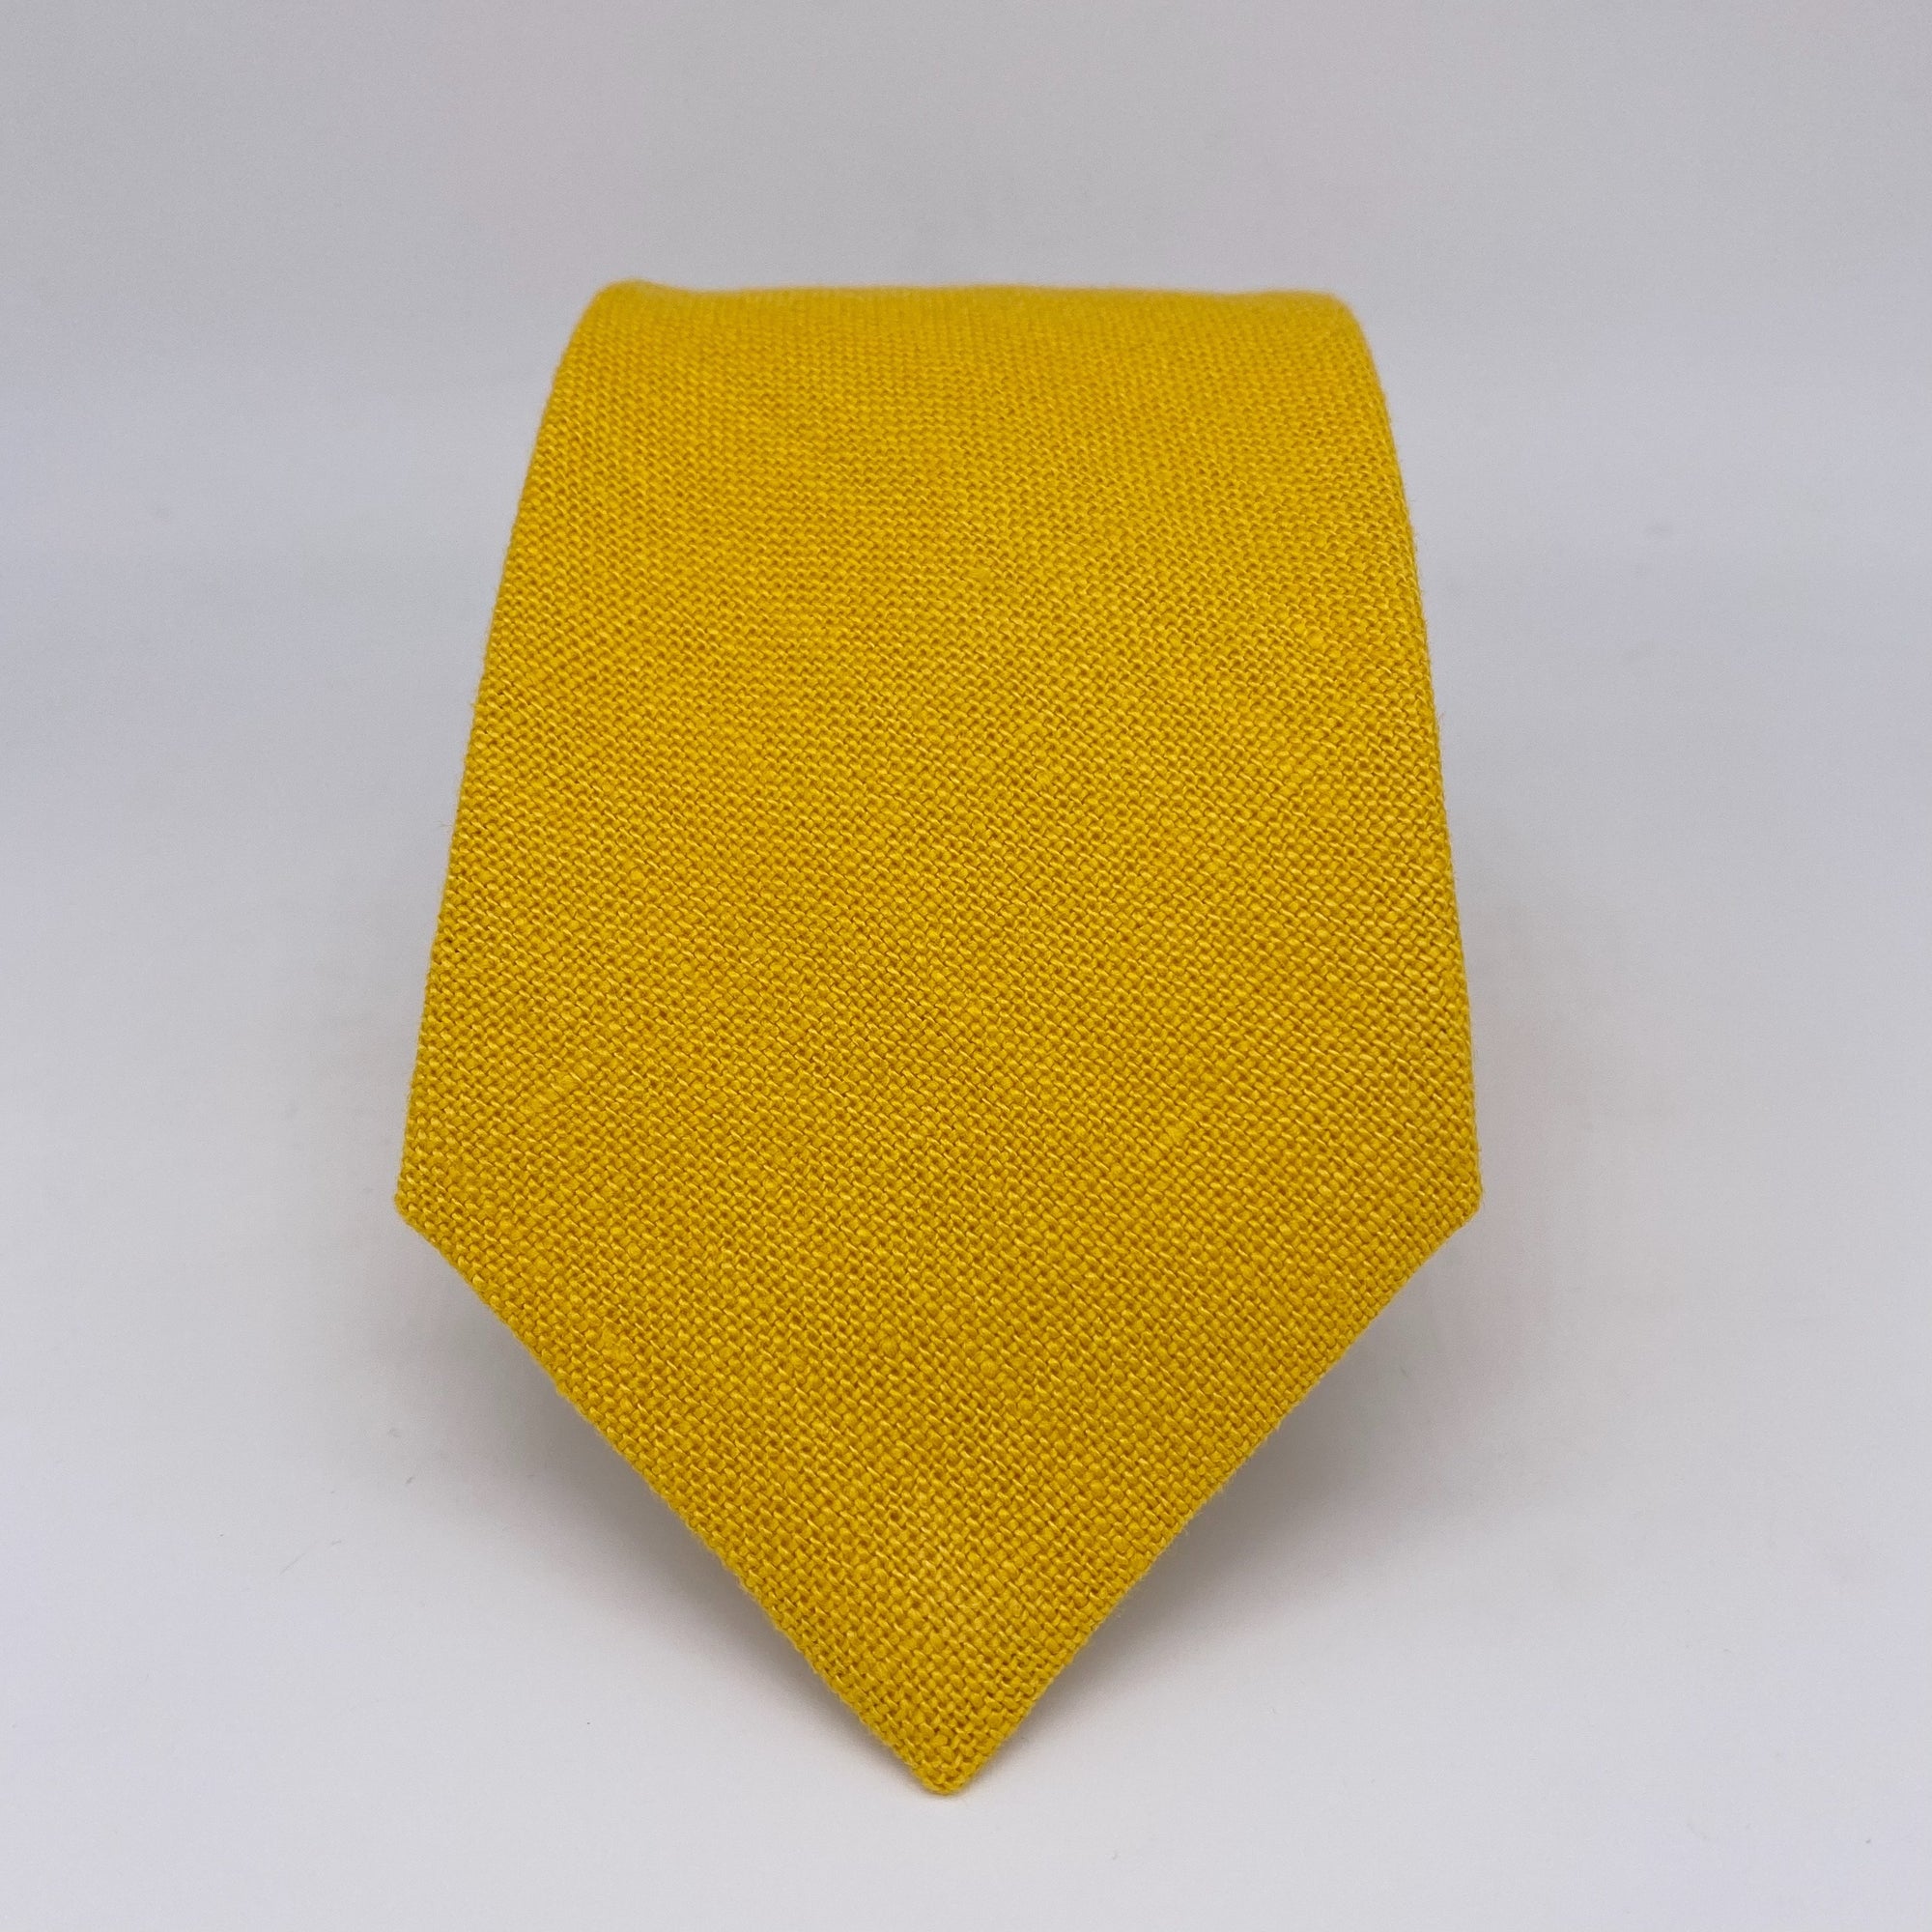 Irish Linen Tie in Mustard Yellow by the Belfast Bow Company